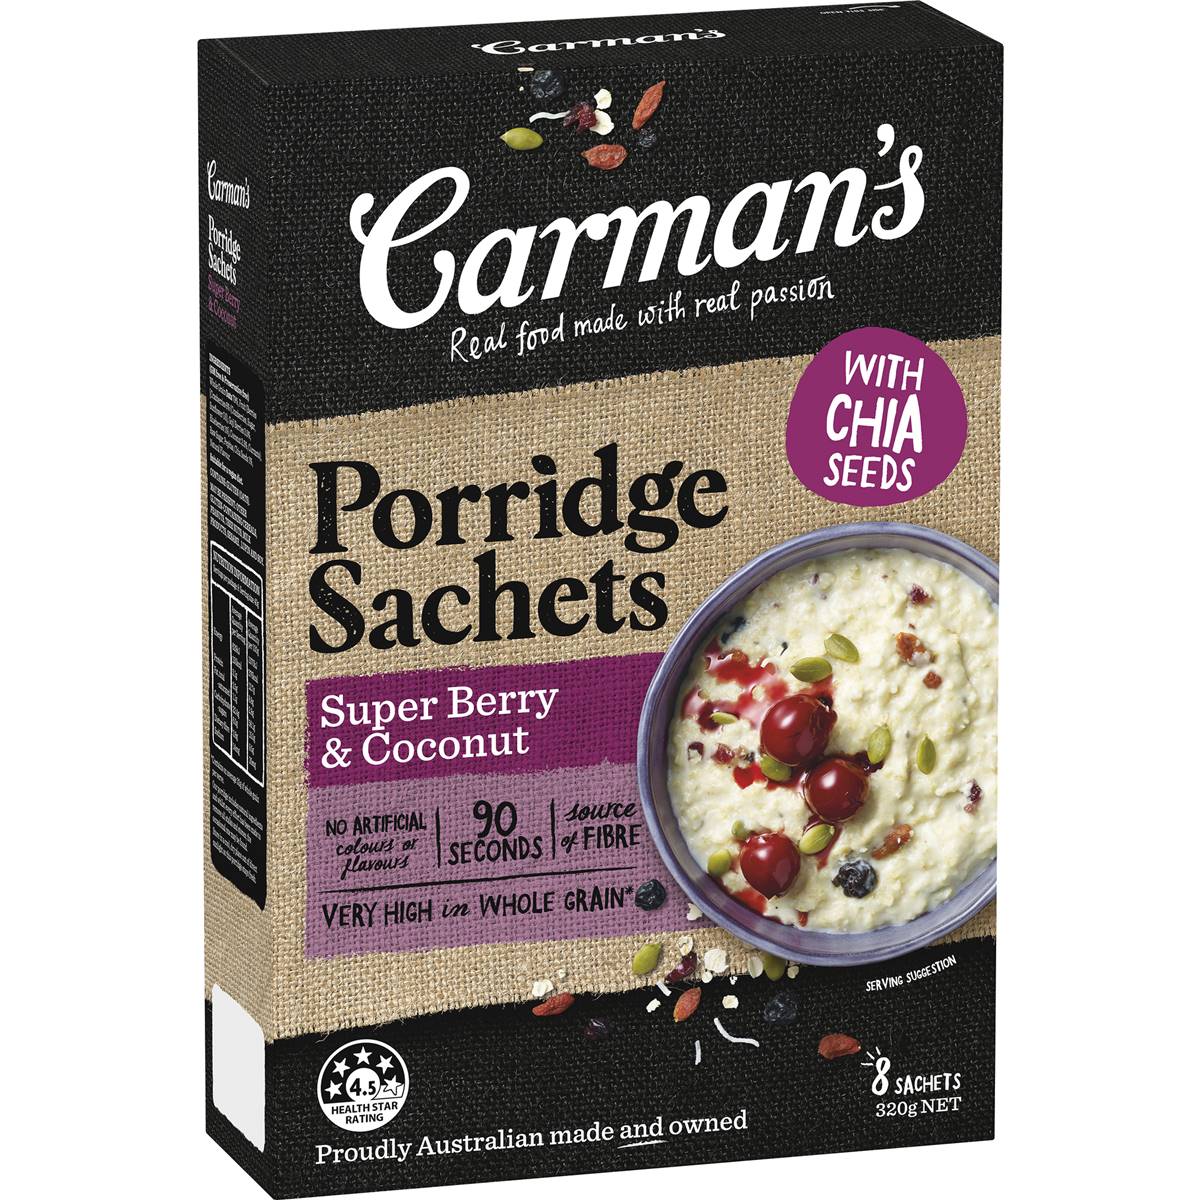 Carman's Super Berry & Coconut Gourmet Porridge Sachets 320g